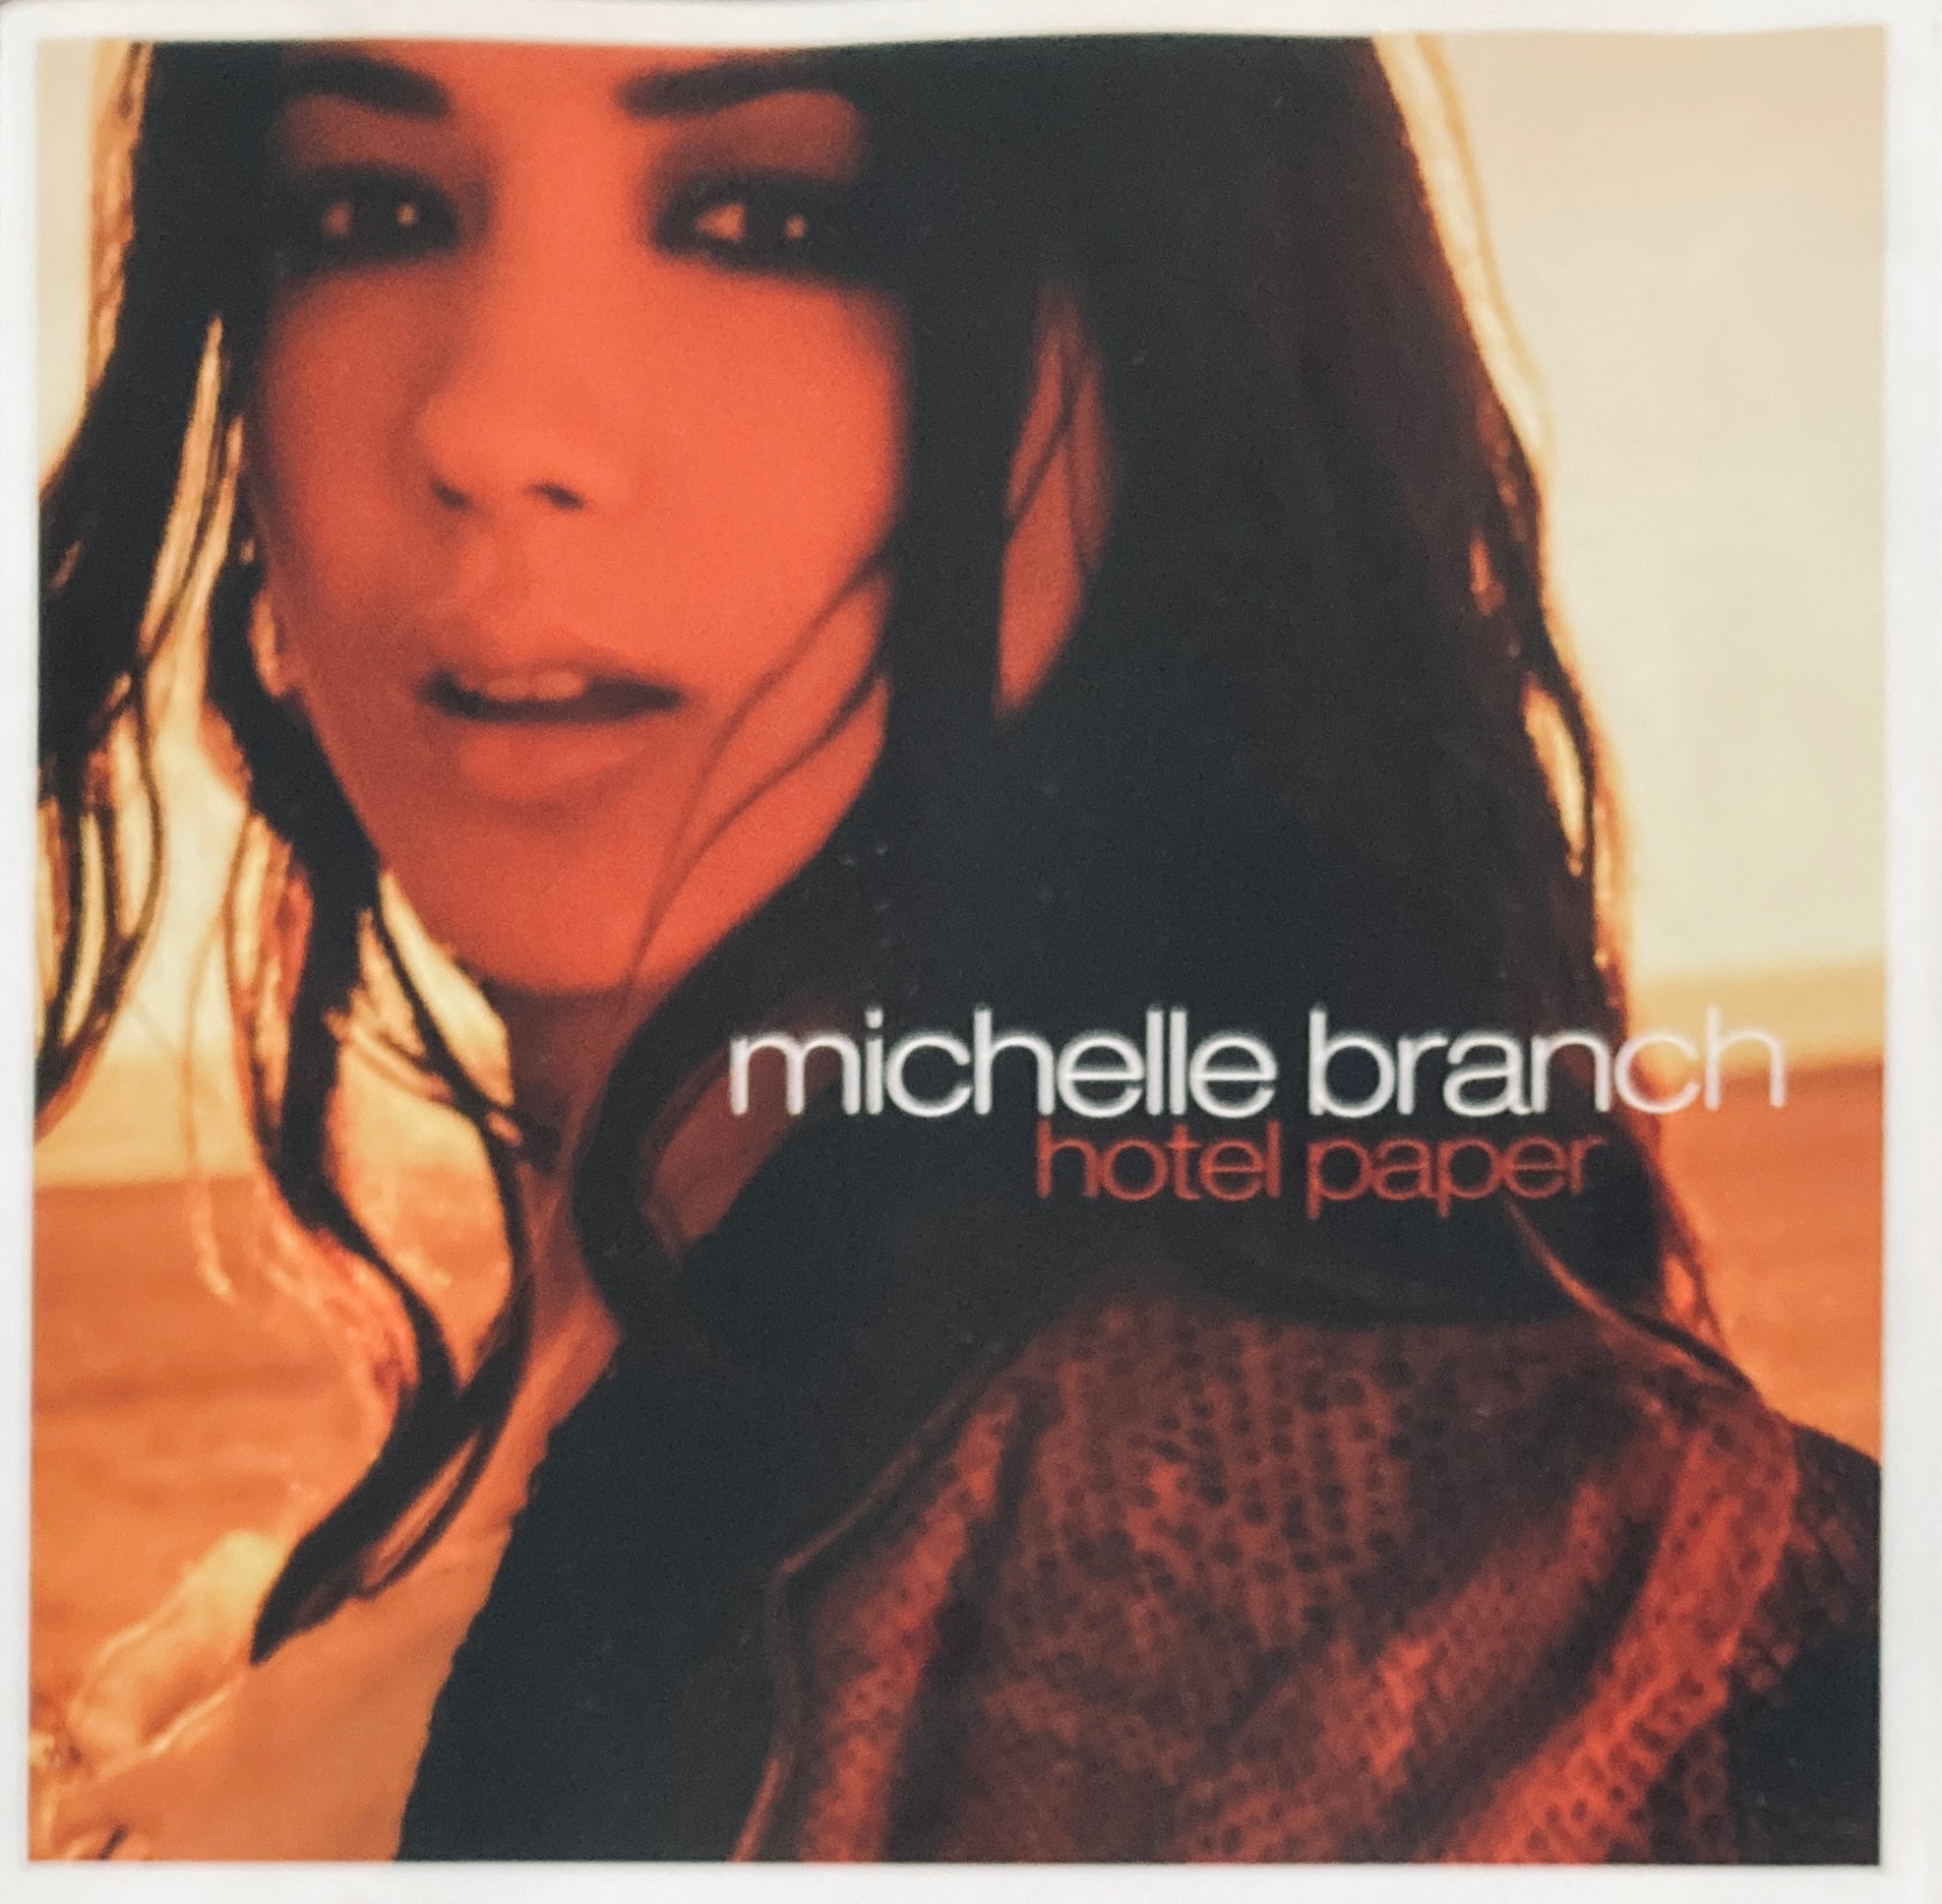 Michelle Branch “Hotel Paper” CD (2003)